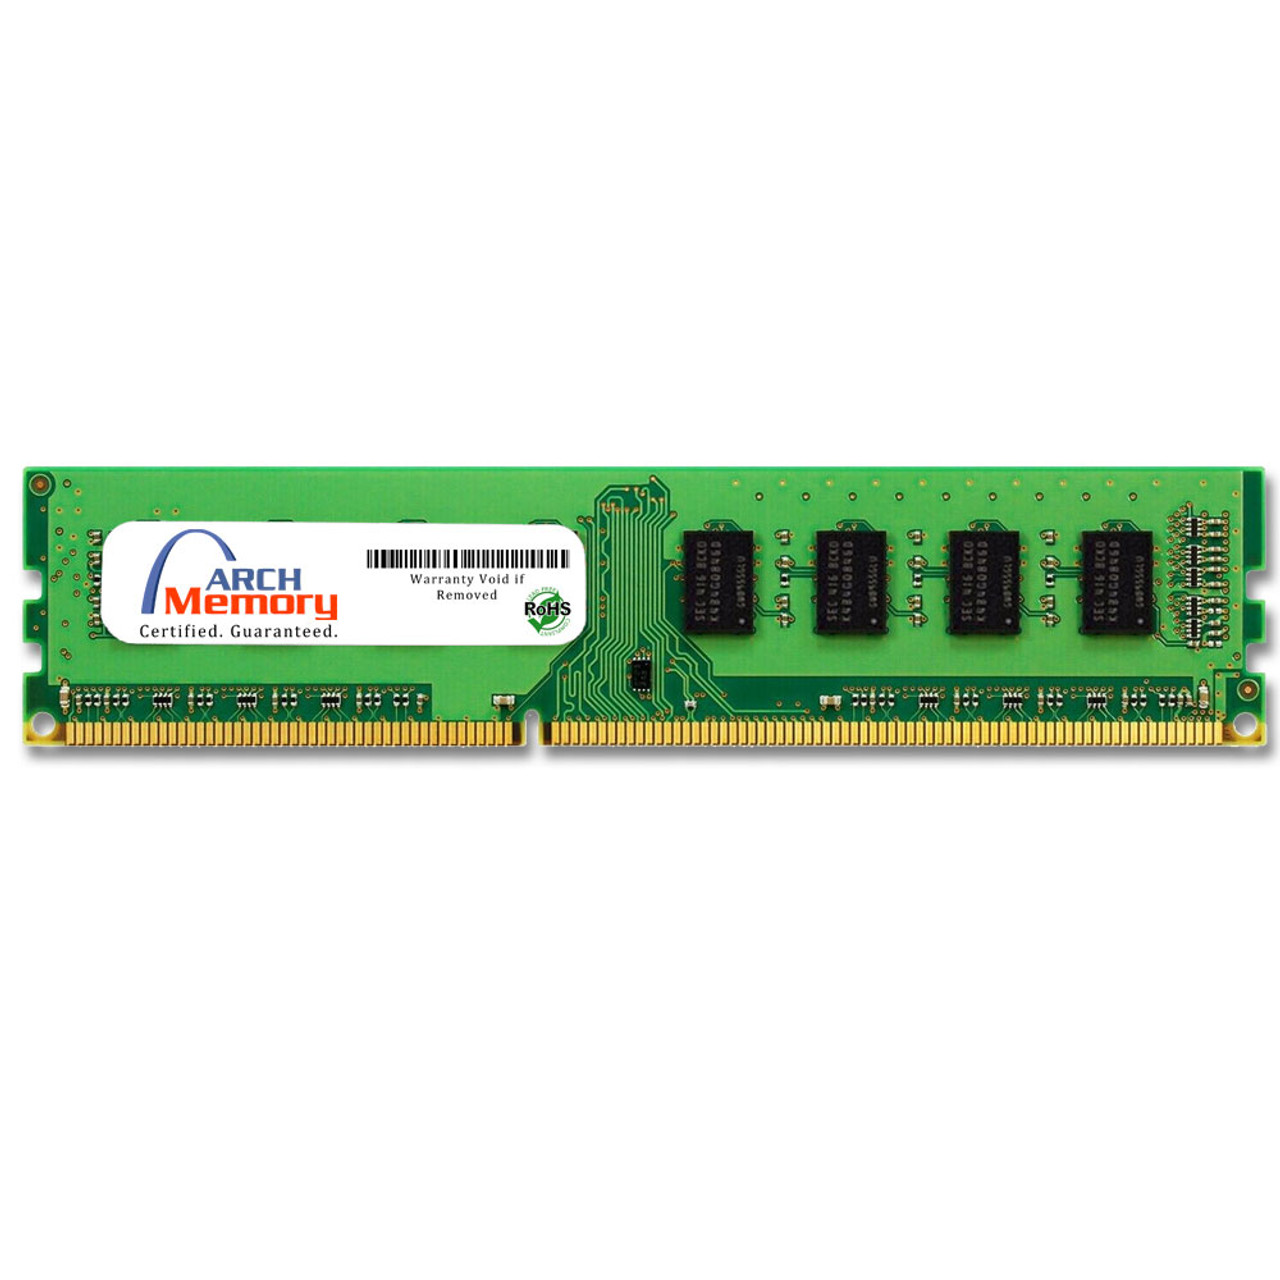 eBay*4GB 240-Pin DDR3-1066 PC3-8500 UDIMM (2Rx8) RAM